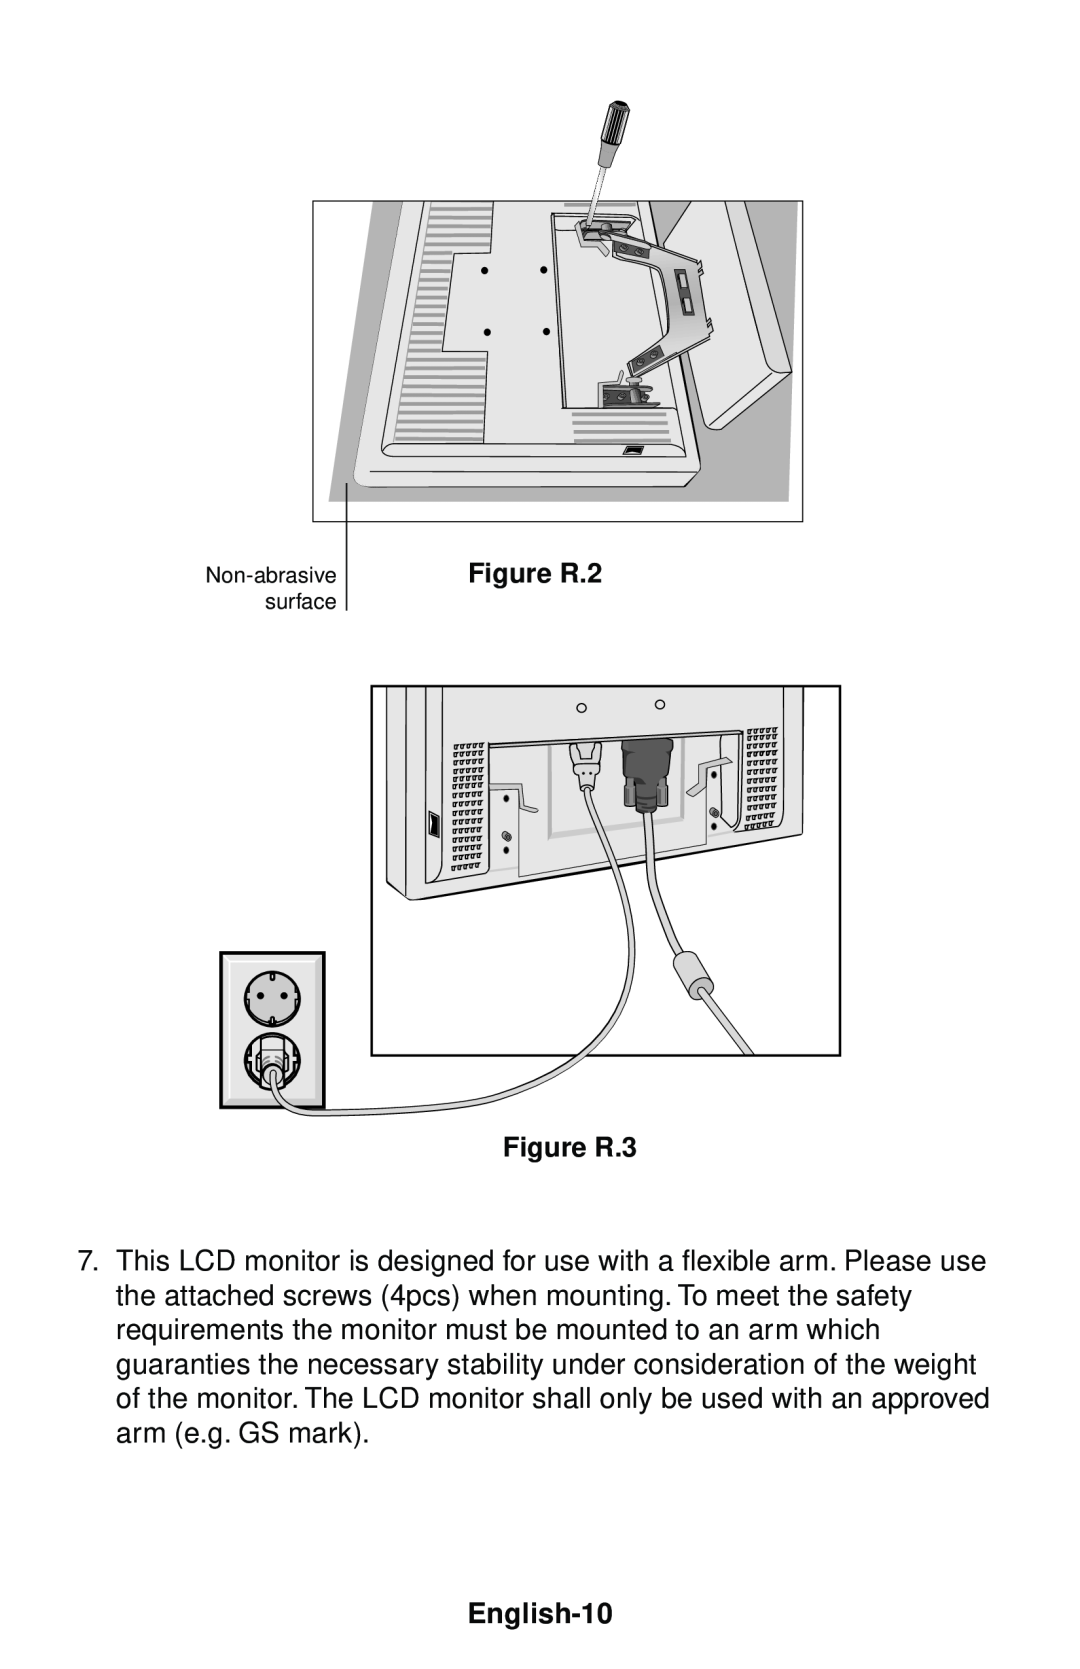 NEC LCD1550V user manual English-10, Figure R.2 Figure R.3 